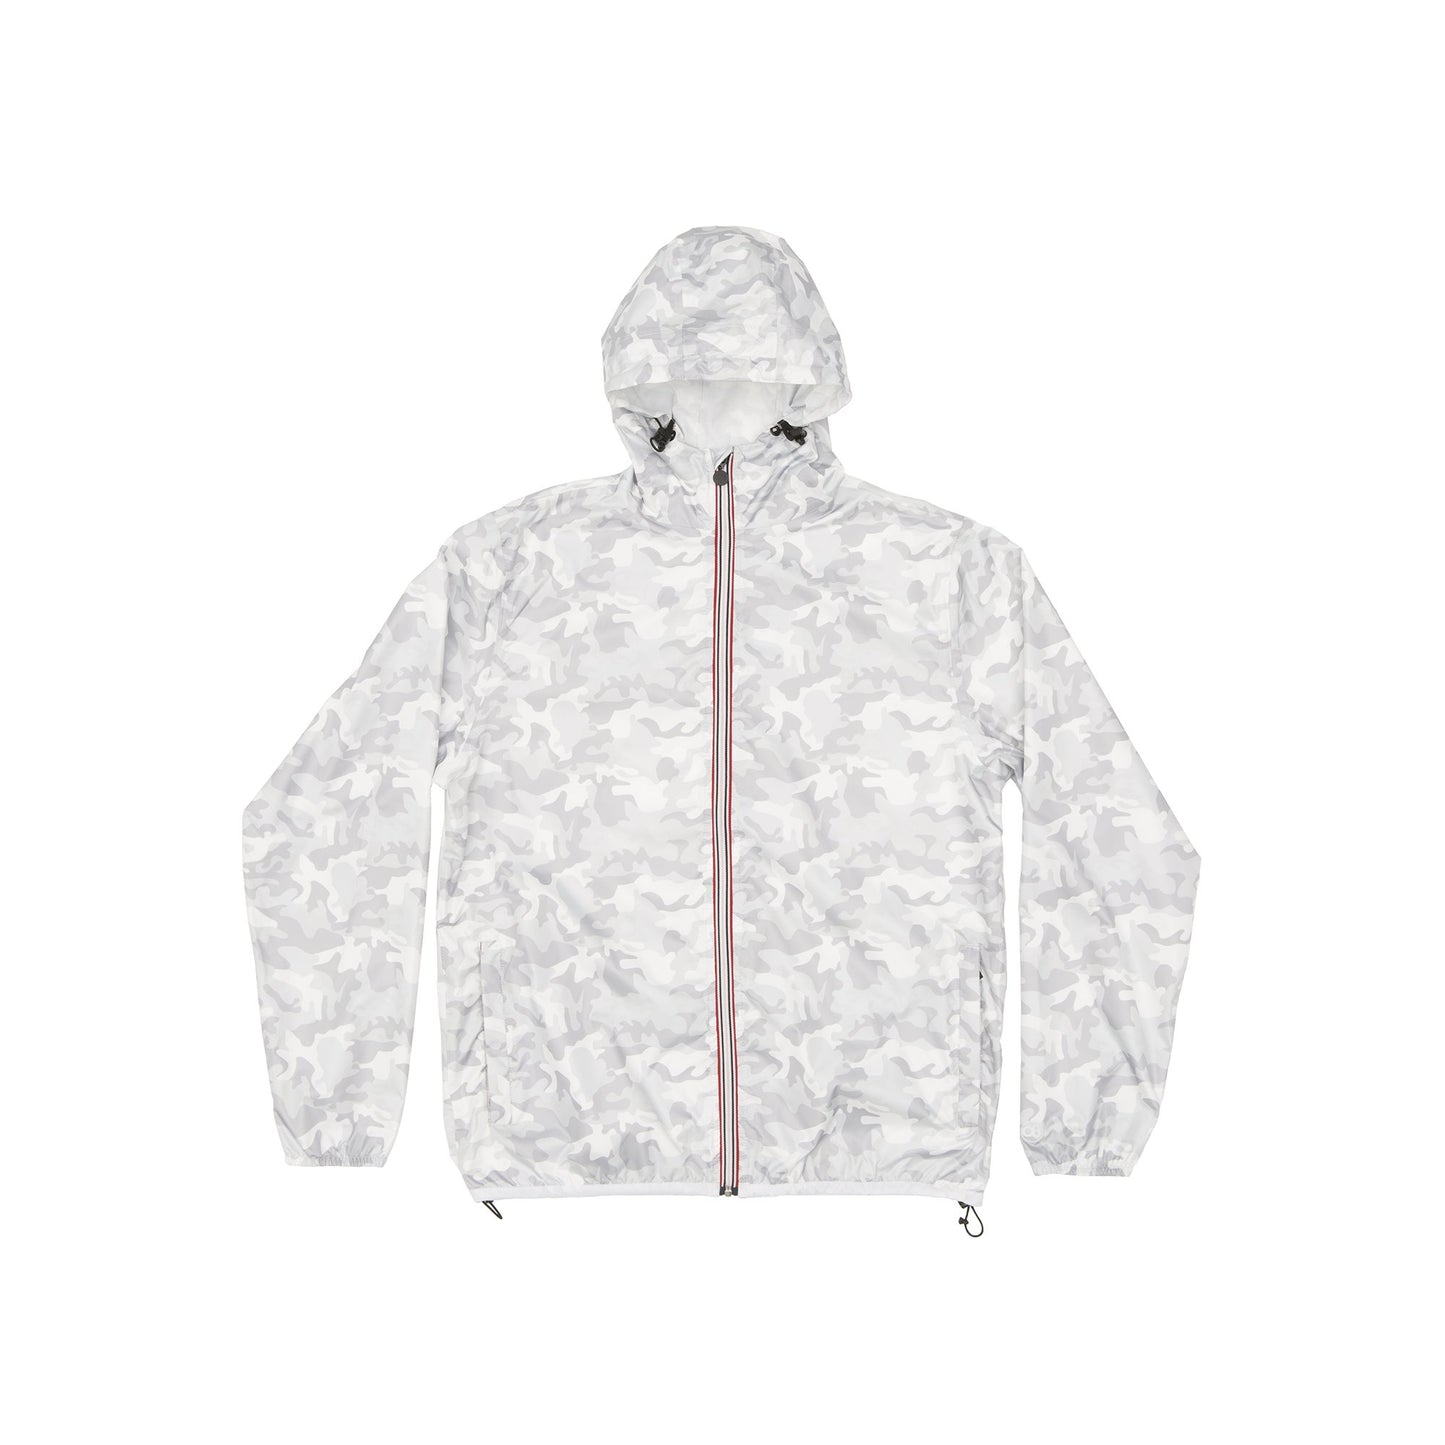 White camo full zip packable rain jacket and windbreaker